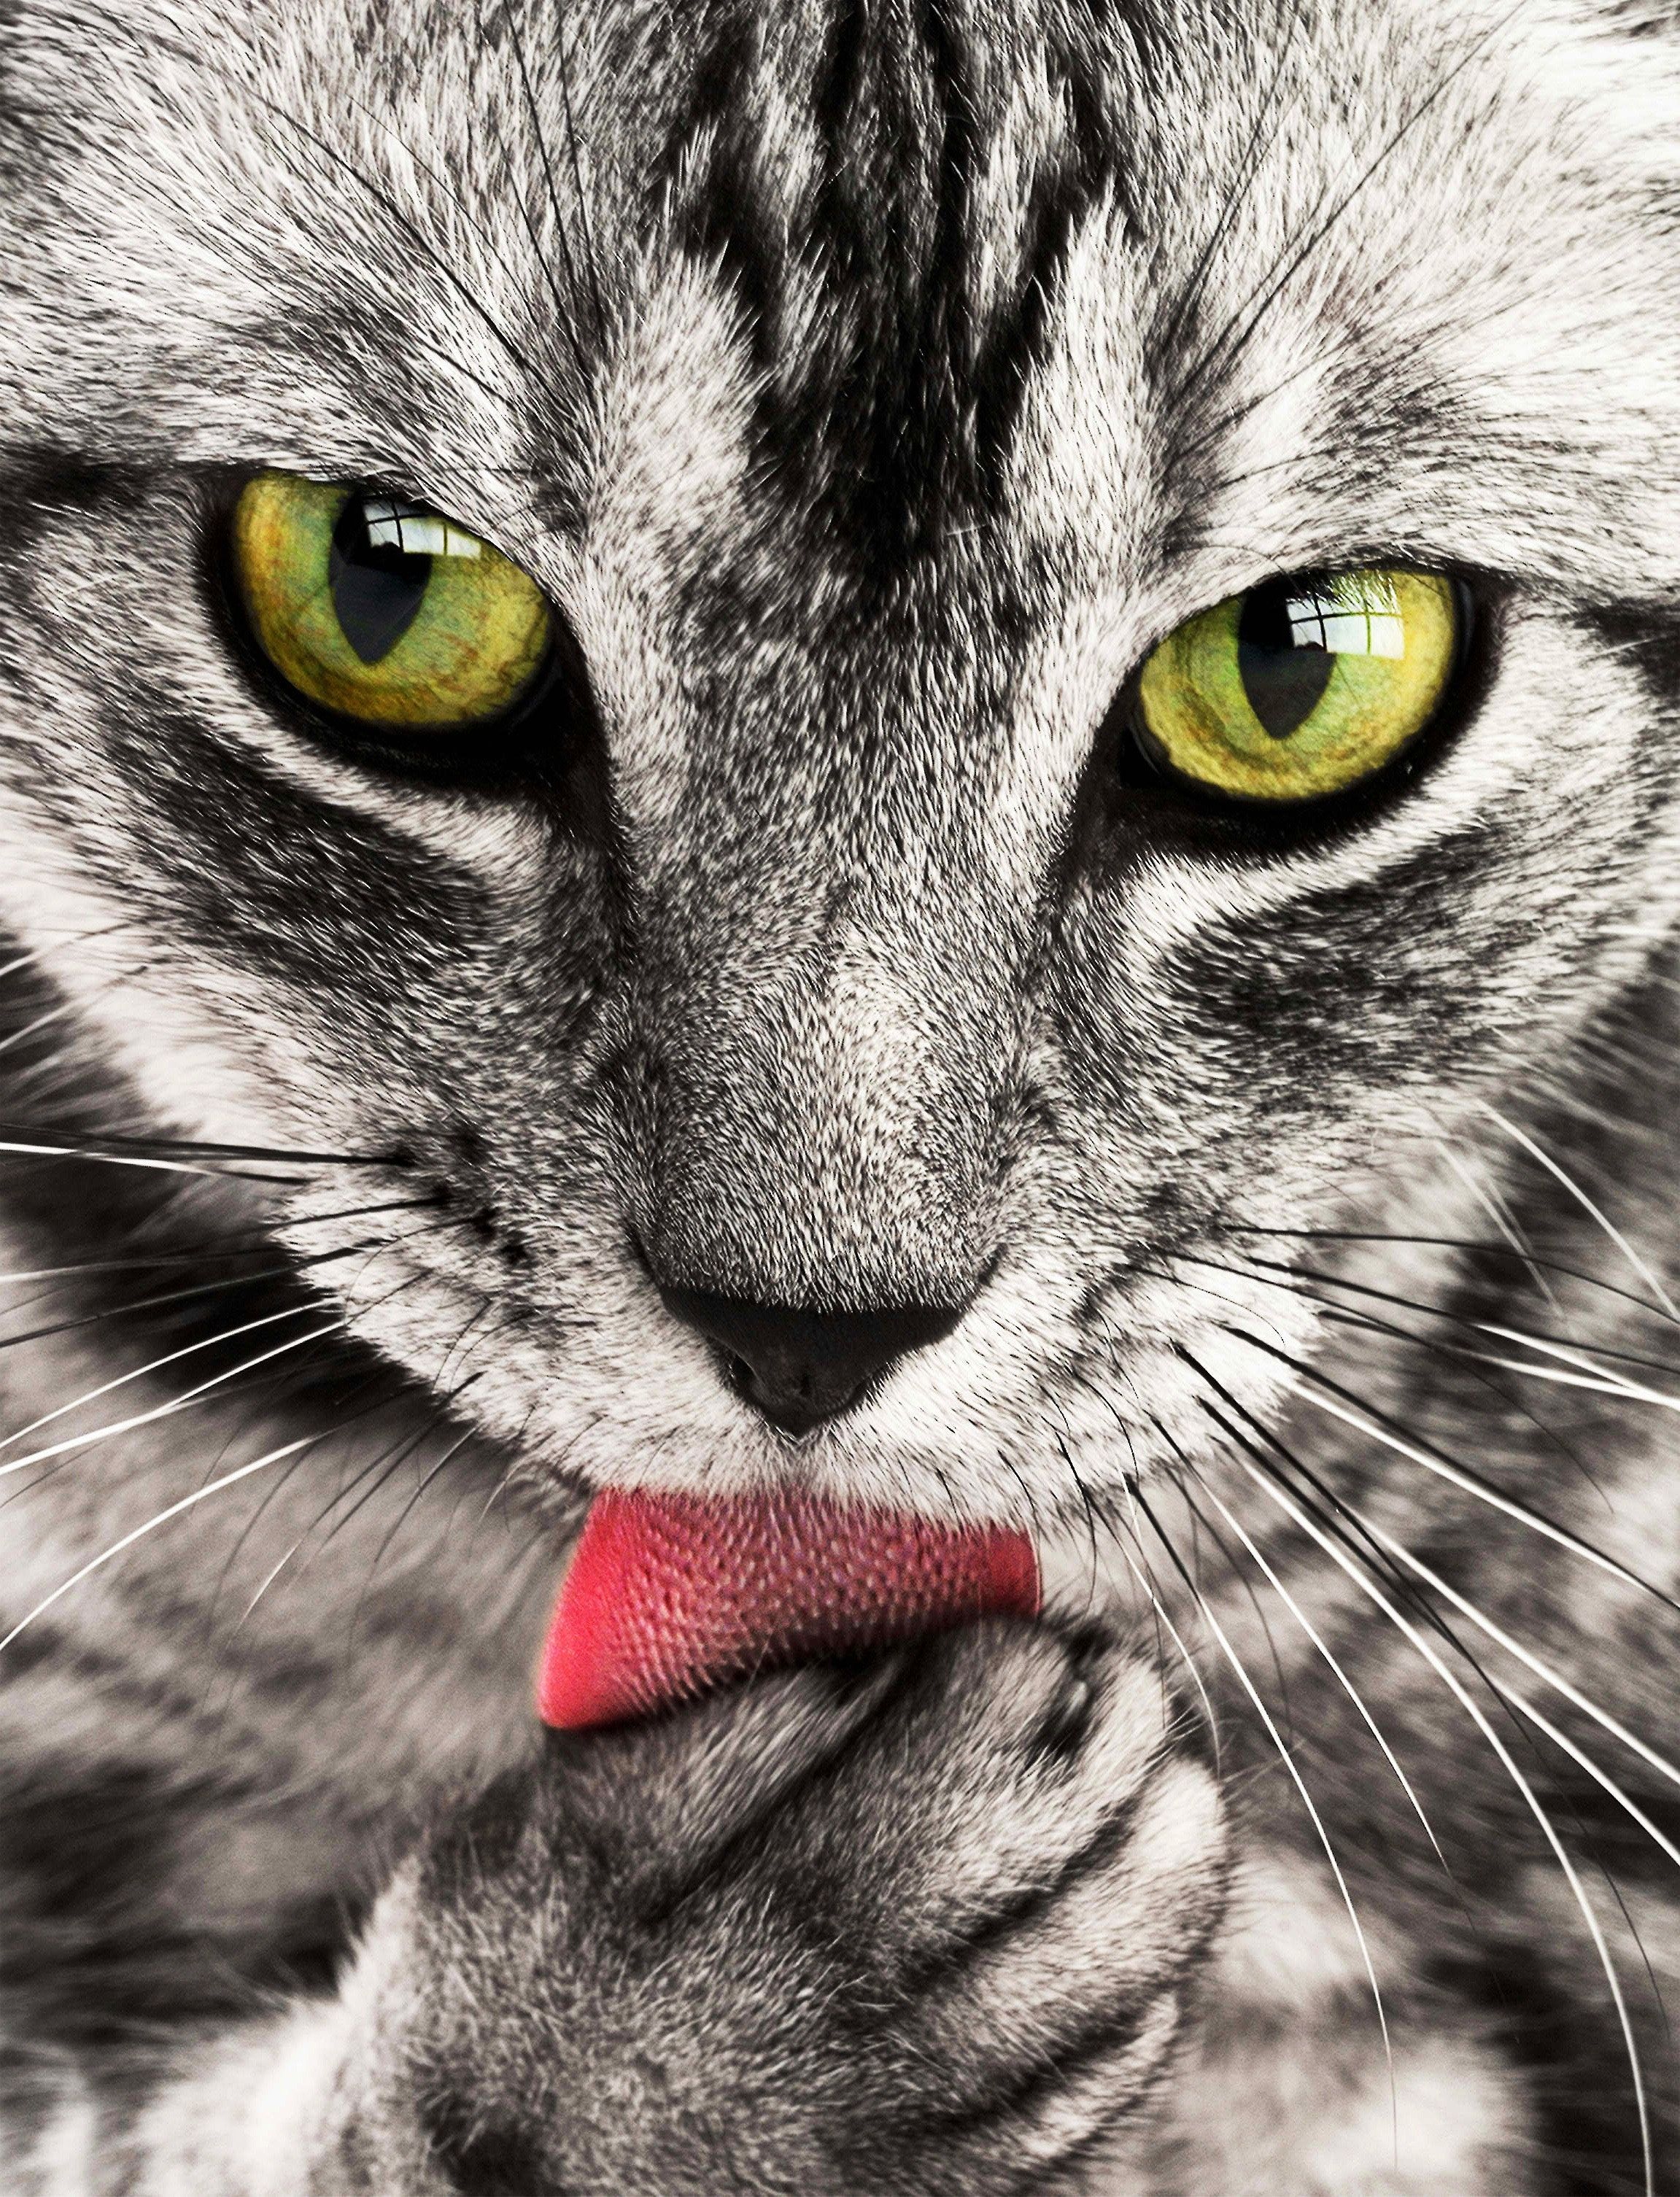 Best Cat Photo · 100% Free Downloads